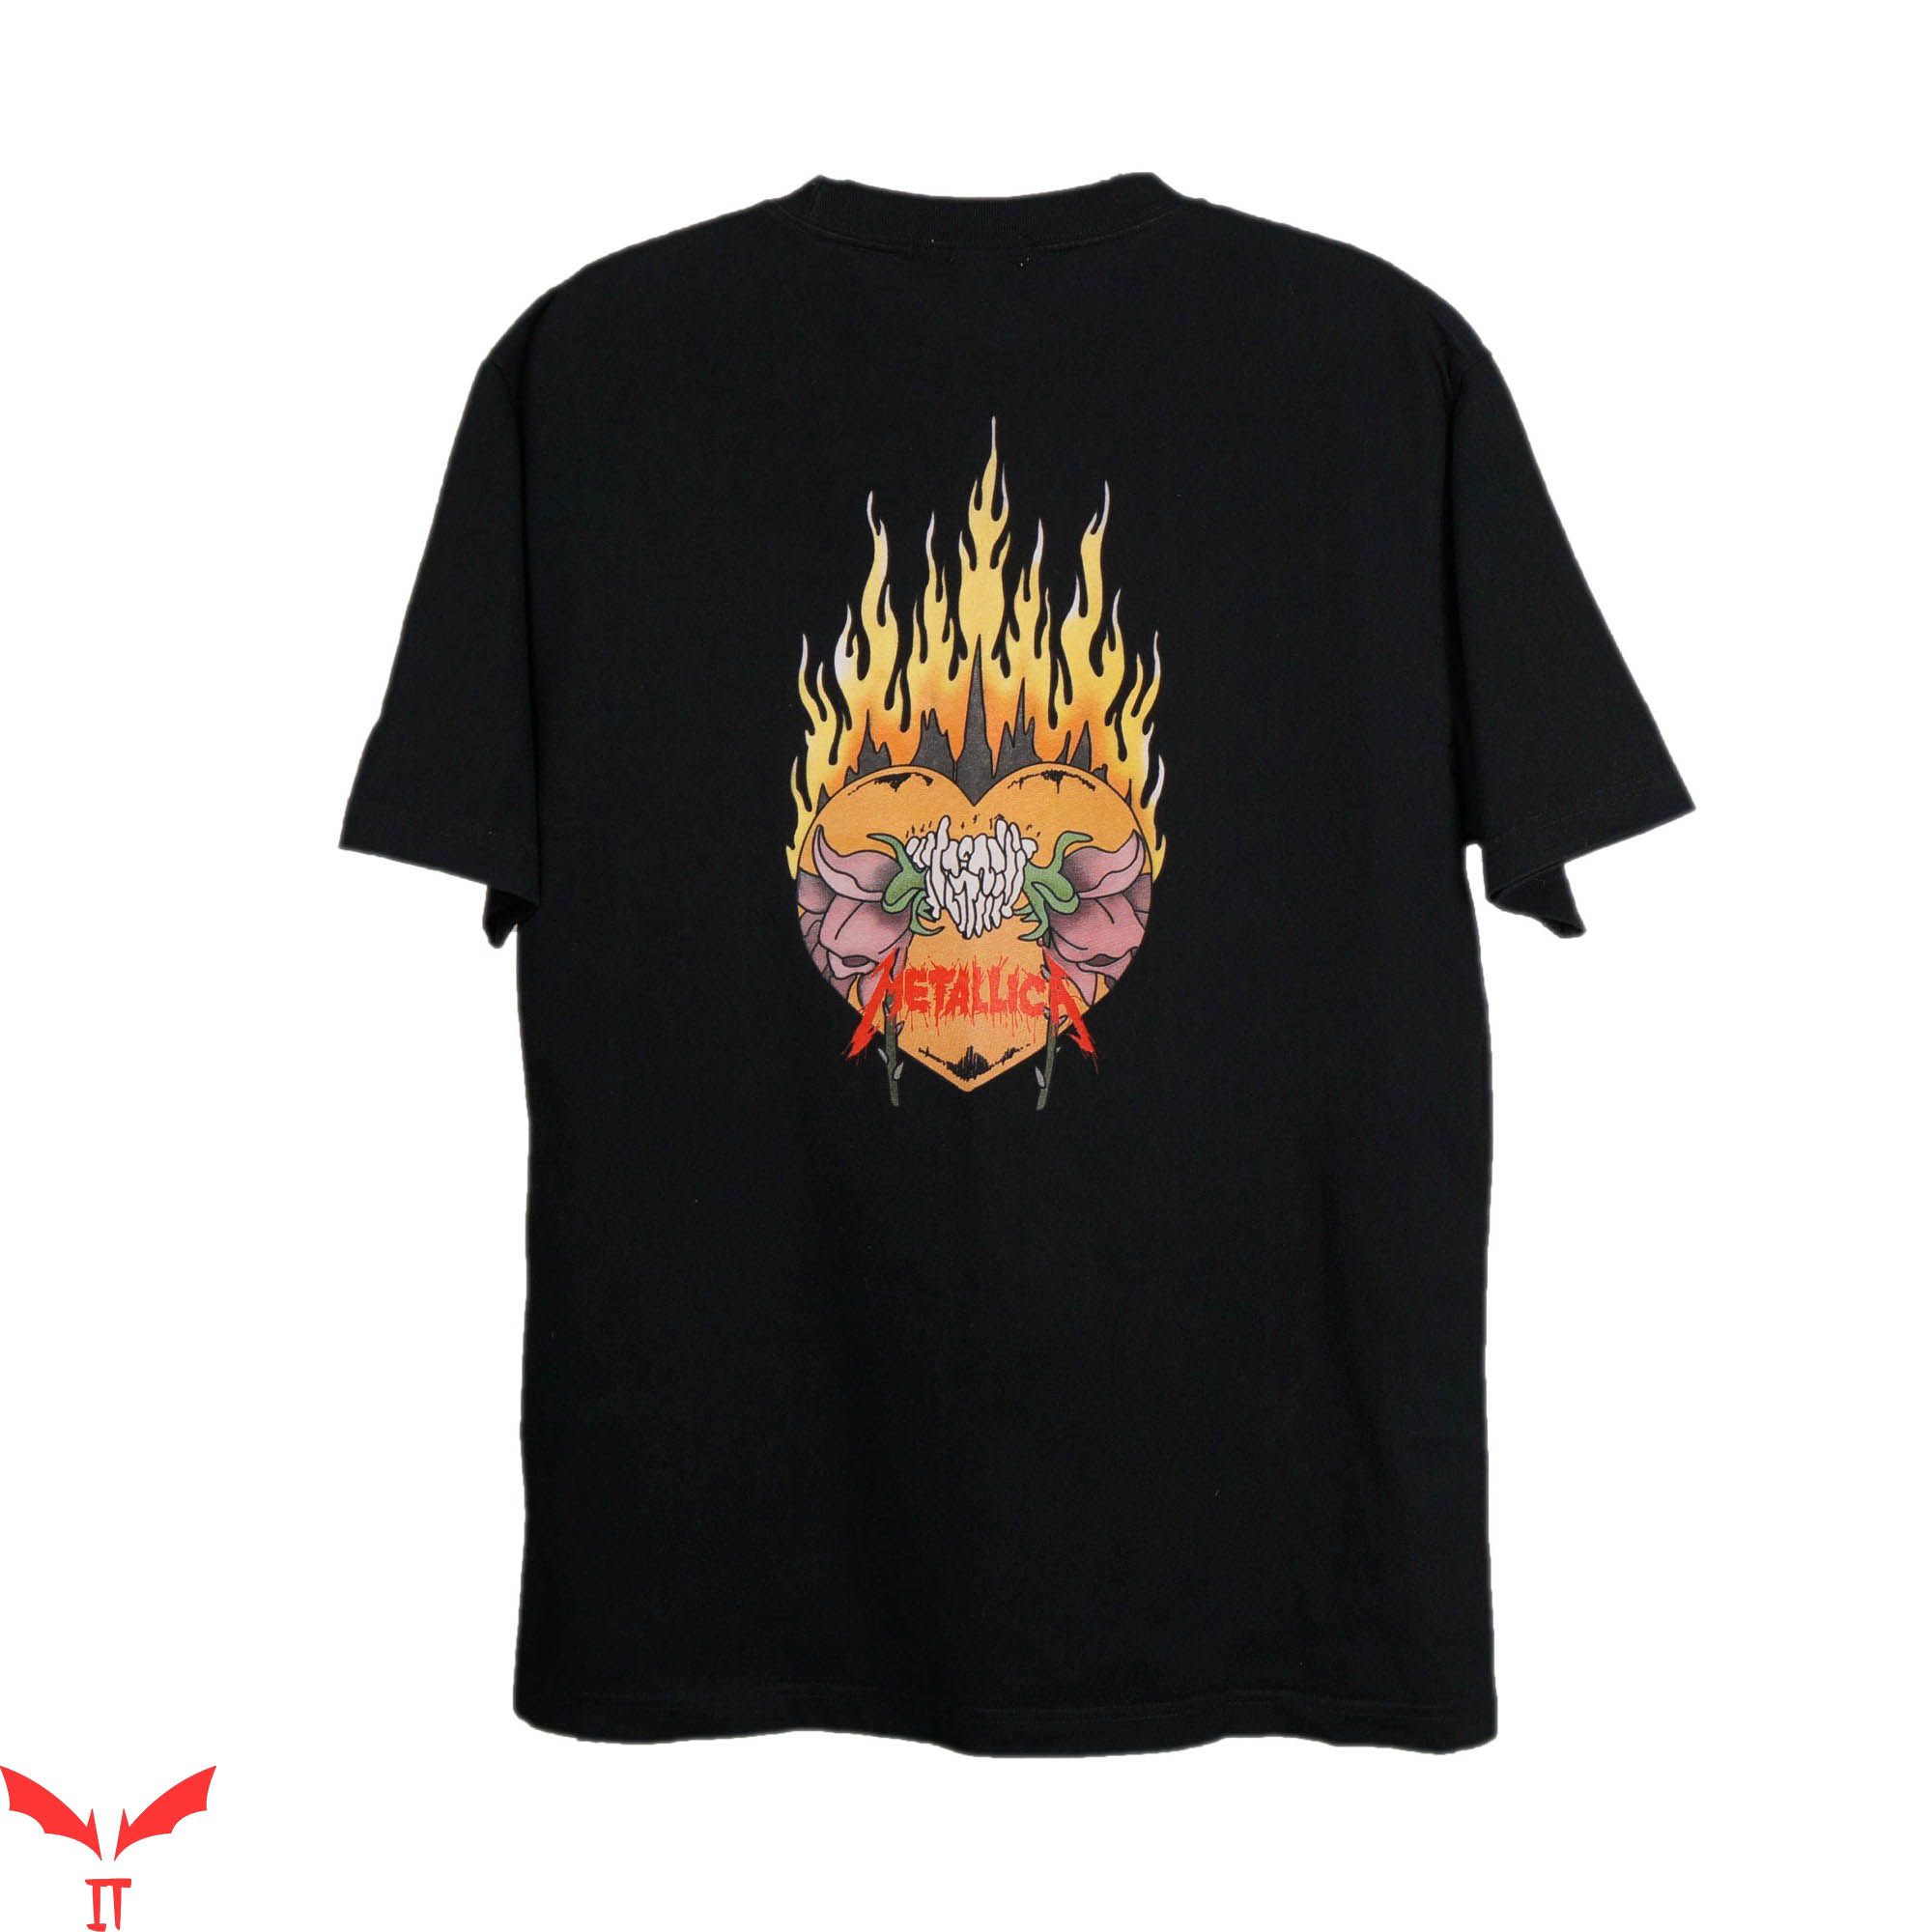 Metallica Pushead T-Shirt Vintage 90s Flaming Heart Skull